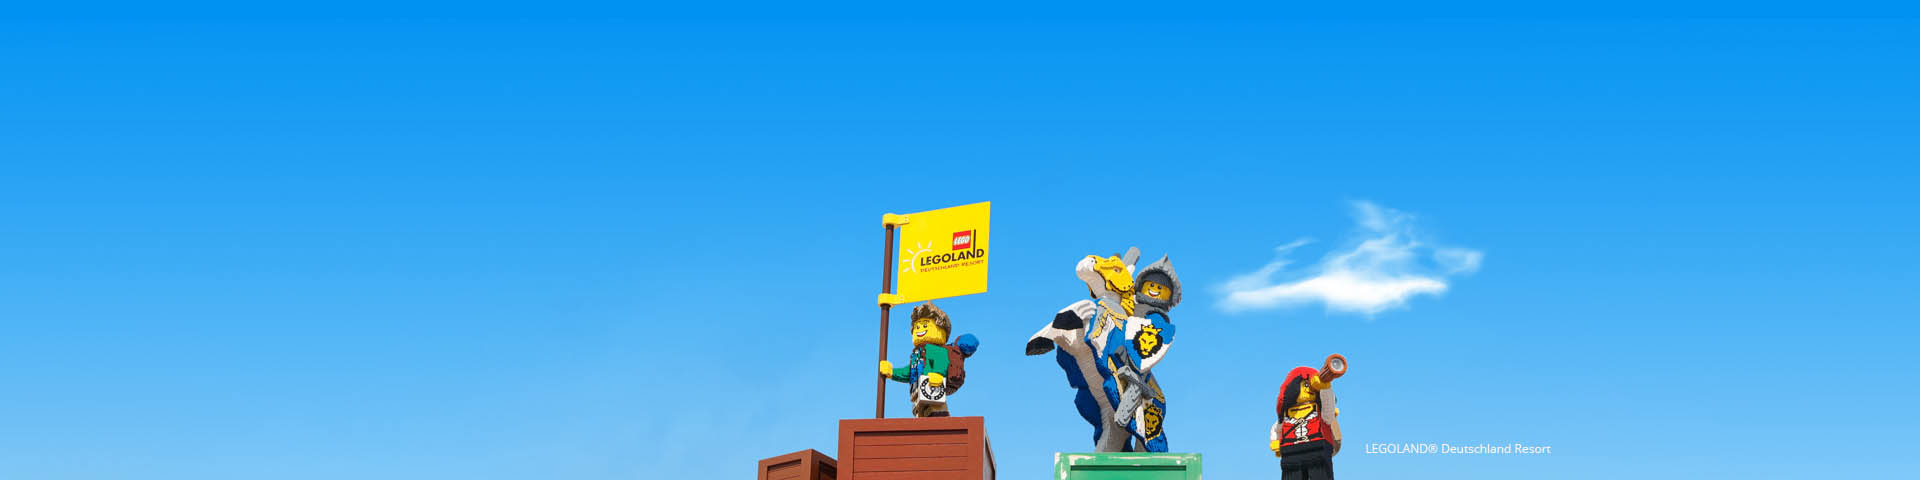 Poppetjes van Lego in Legoland